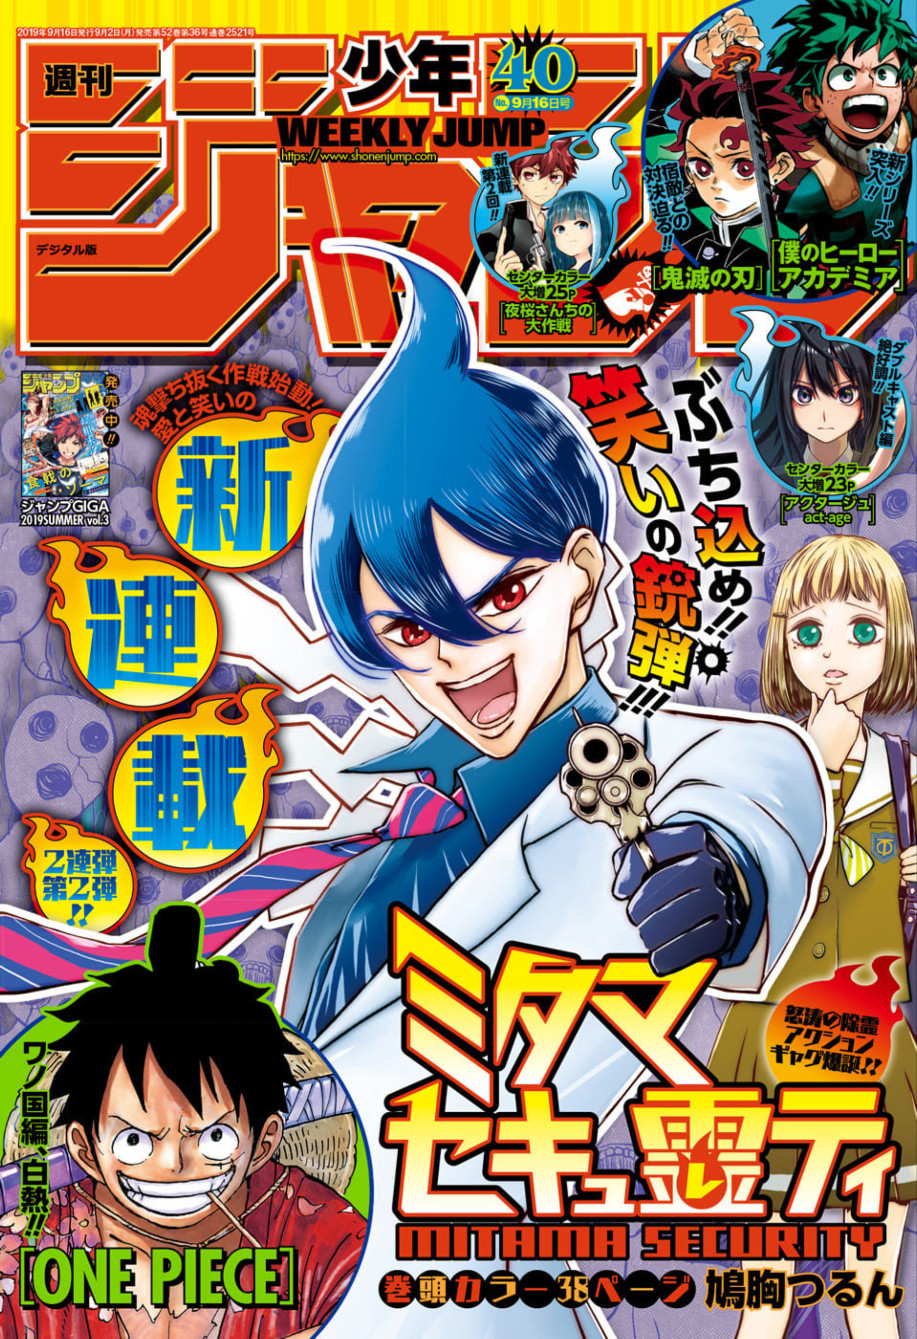 Weekly Shonen Jump Issue 40 19 Jump Database Fandom